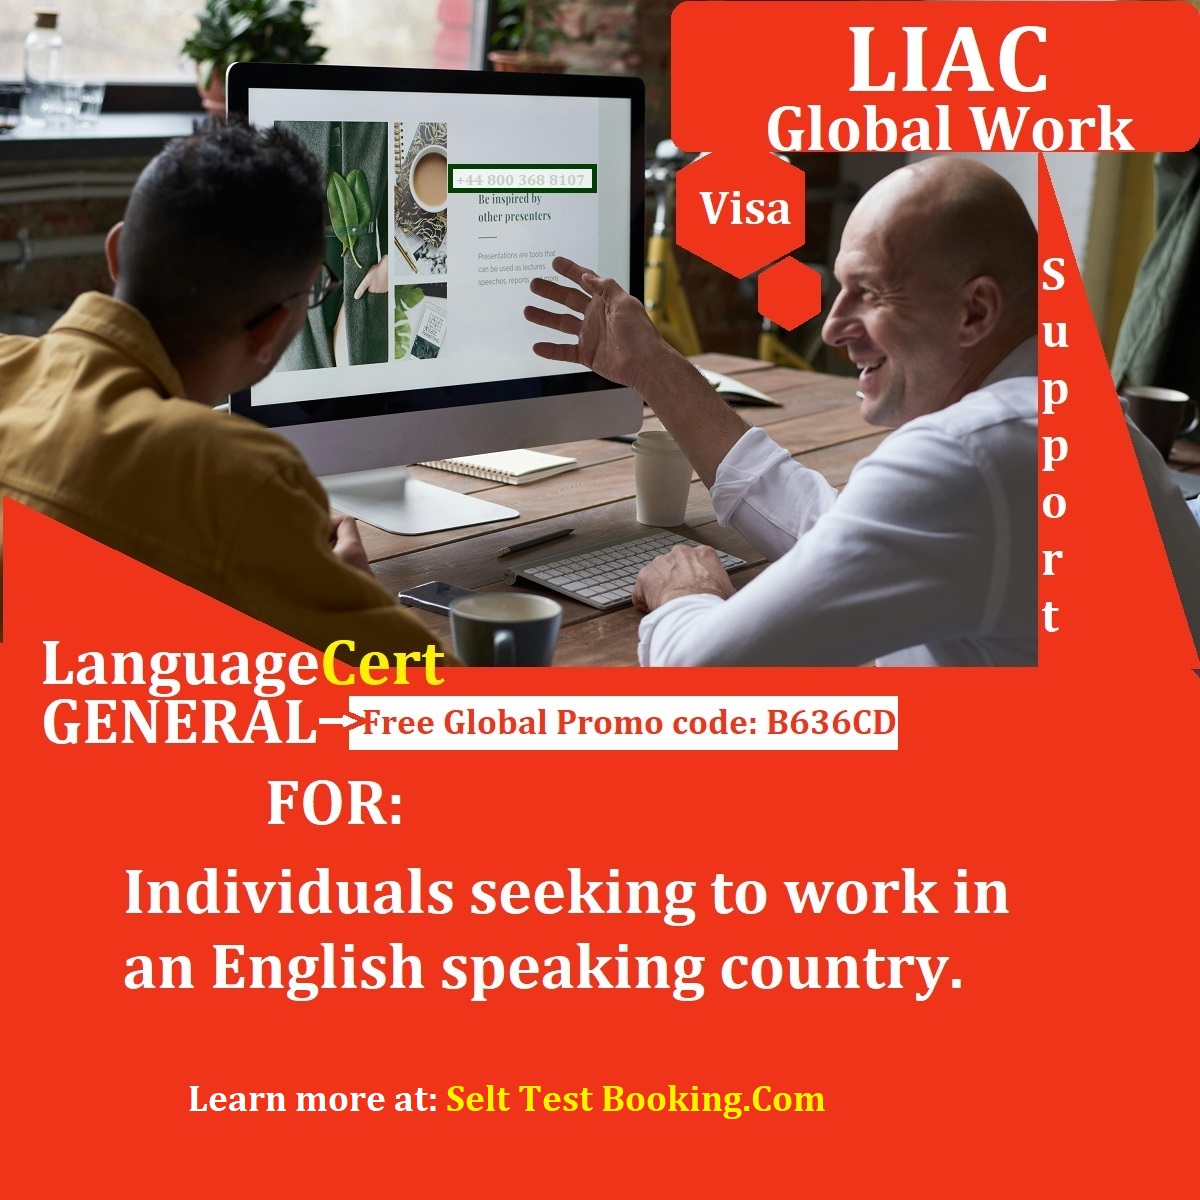 Languagecert General Promo Code